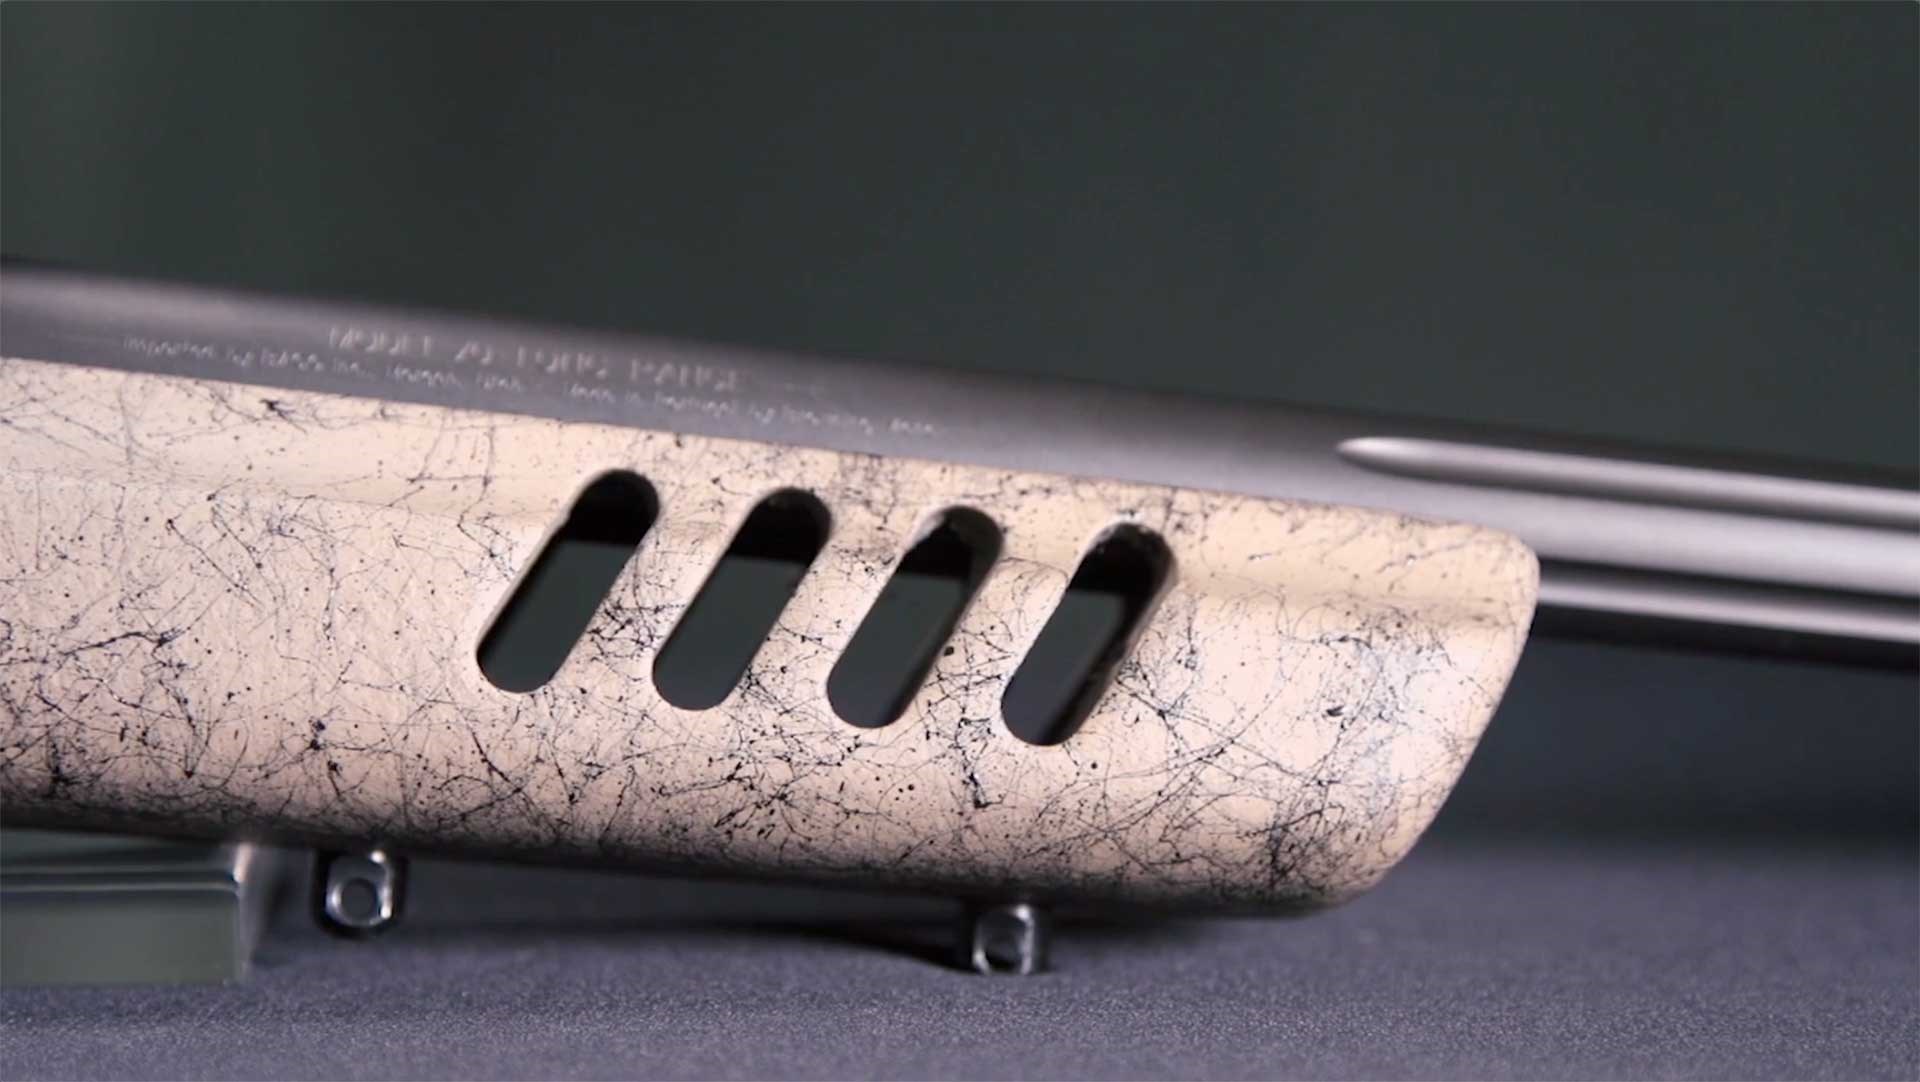 Lightening cuts on the Winchester Model 70 Long Range MB's stock.